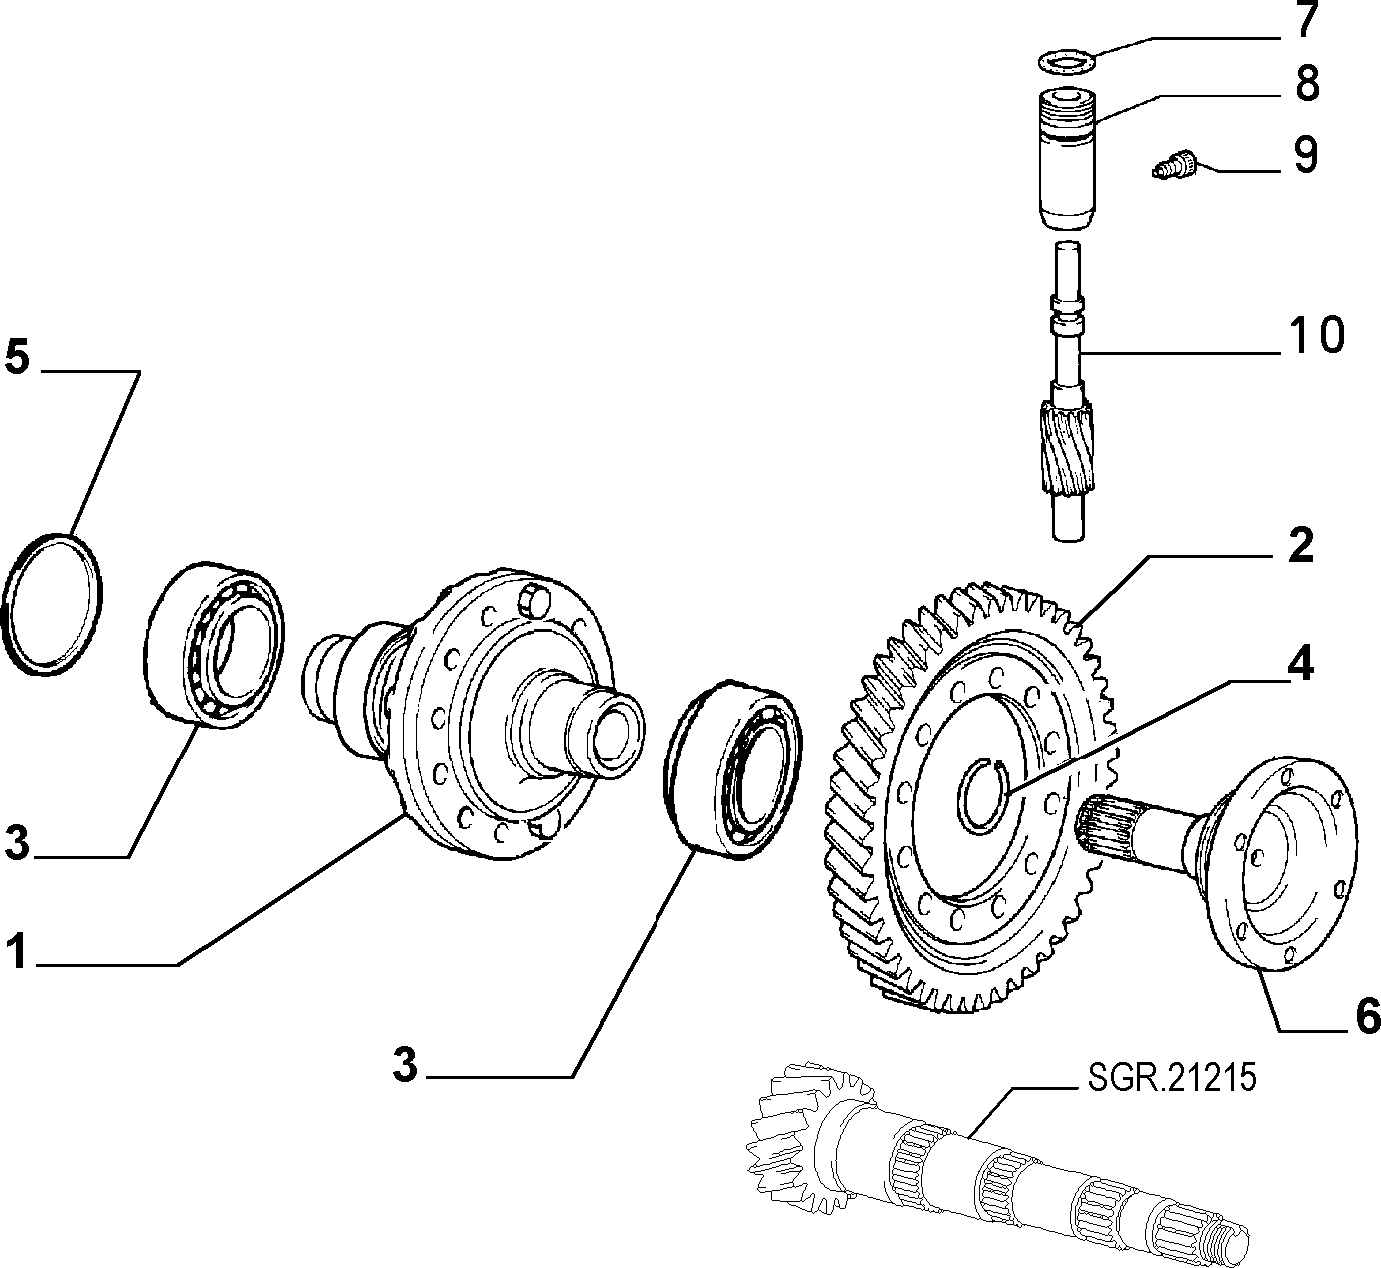 DIFFERENTIAL GEARS for Alfa Romeo GTV G T V (1995 - 1998)